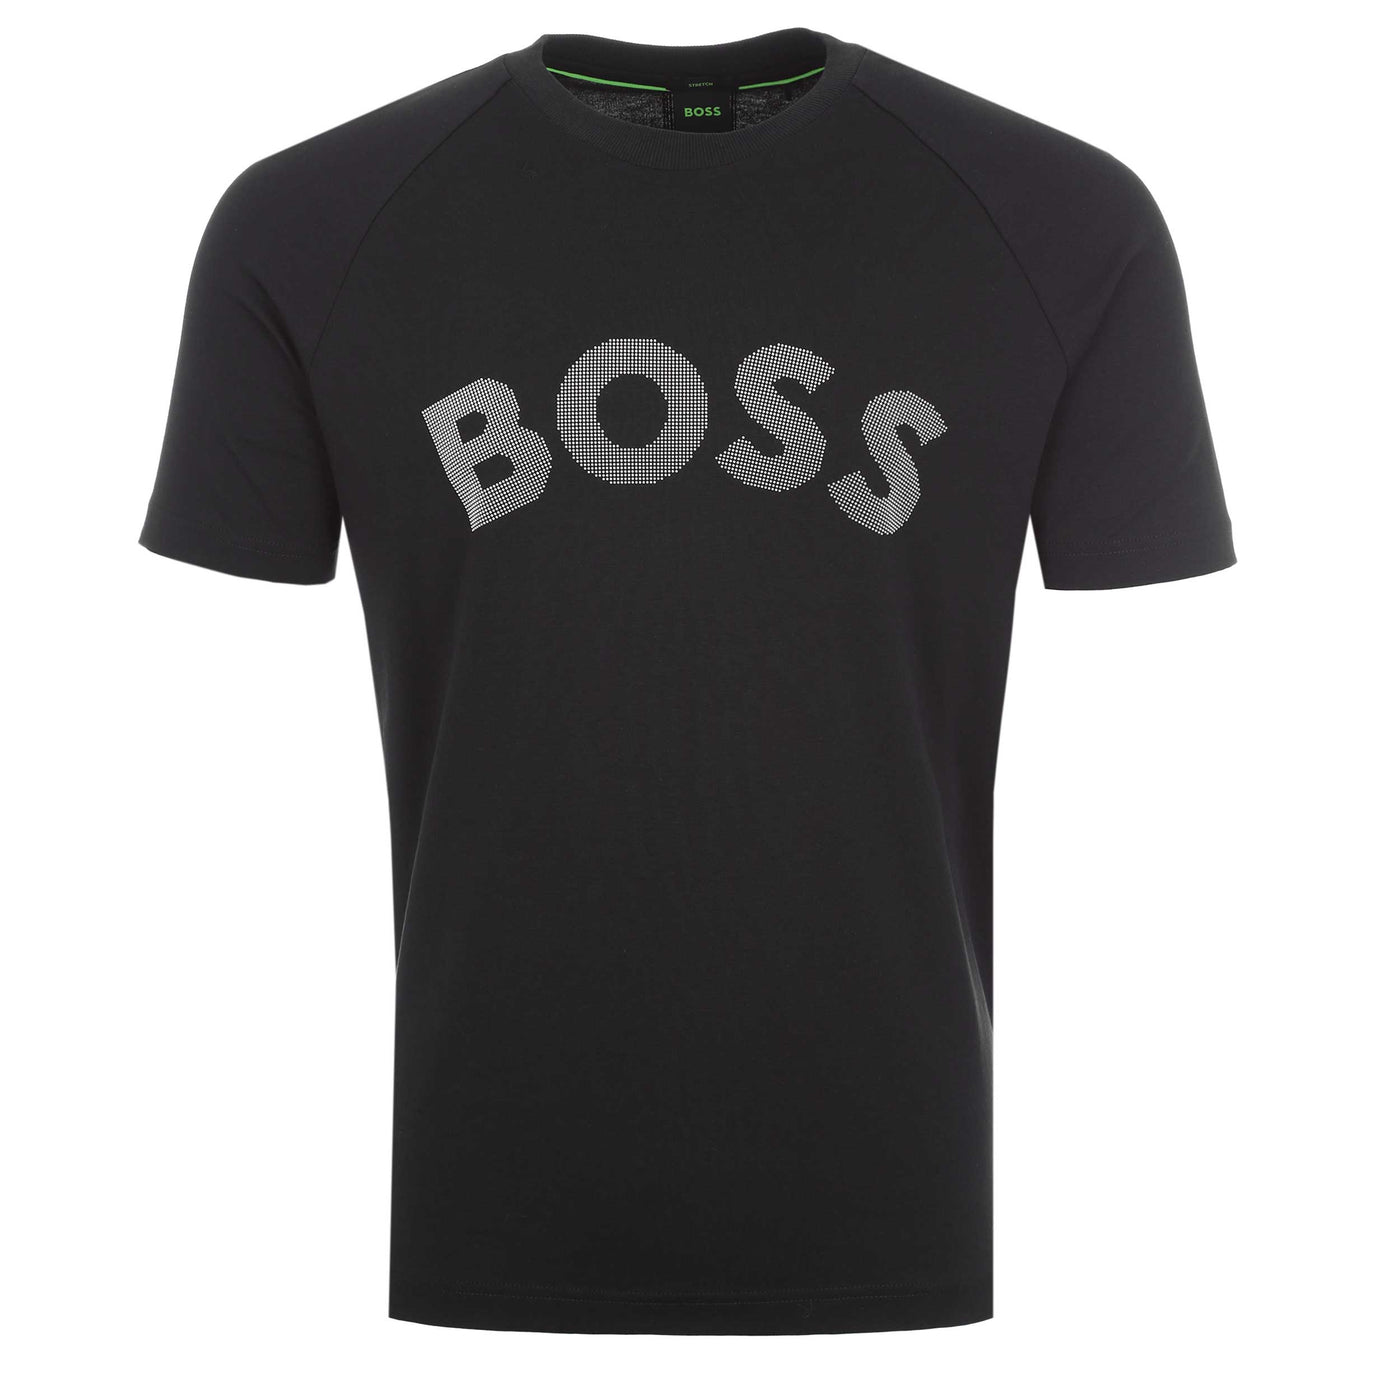 BOSS Tee Naps T-Shirt in Black